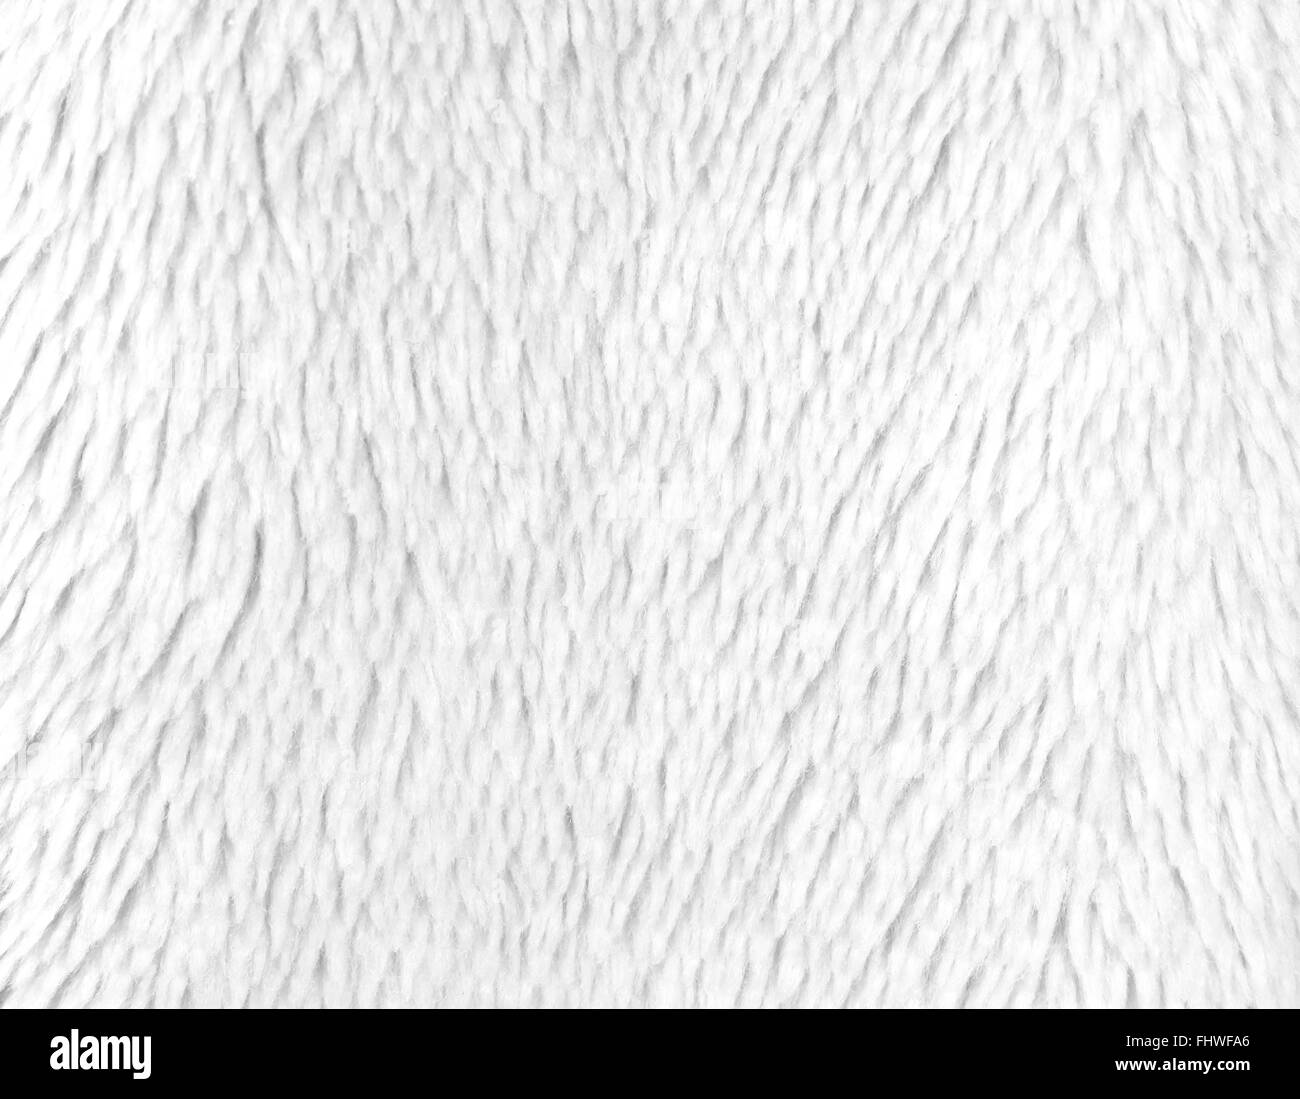 Polar fleece Black and White Stock Photos & Images - Alamy